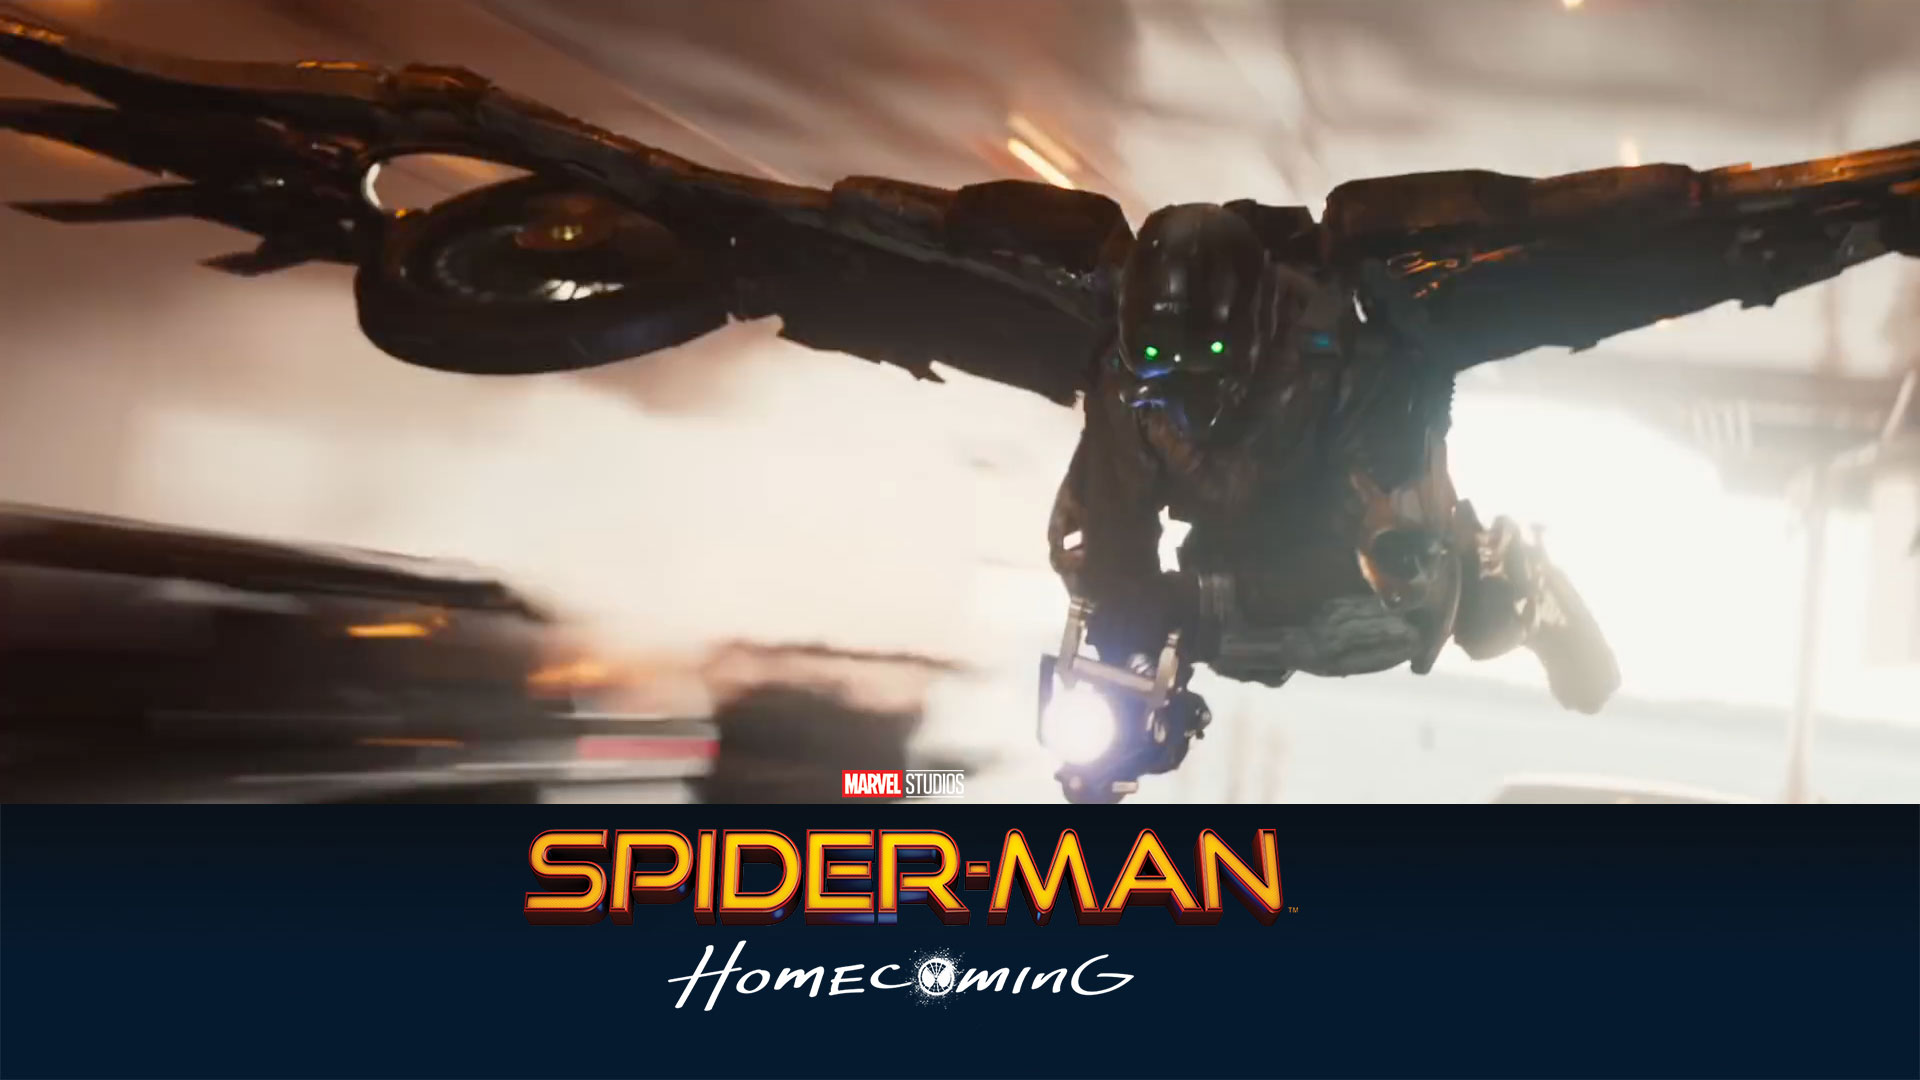 spiderman homecoming wallpaper,action adventure game,fictional character,font,digital compositing,batman